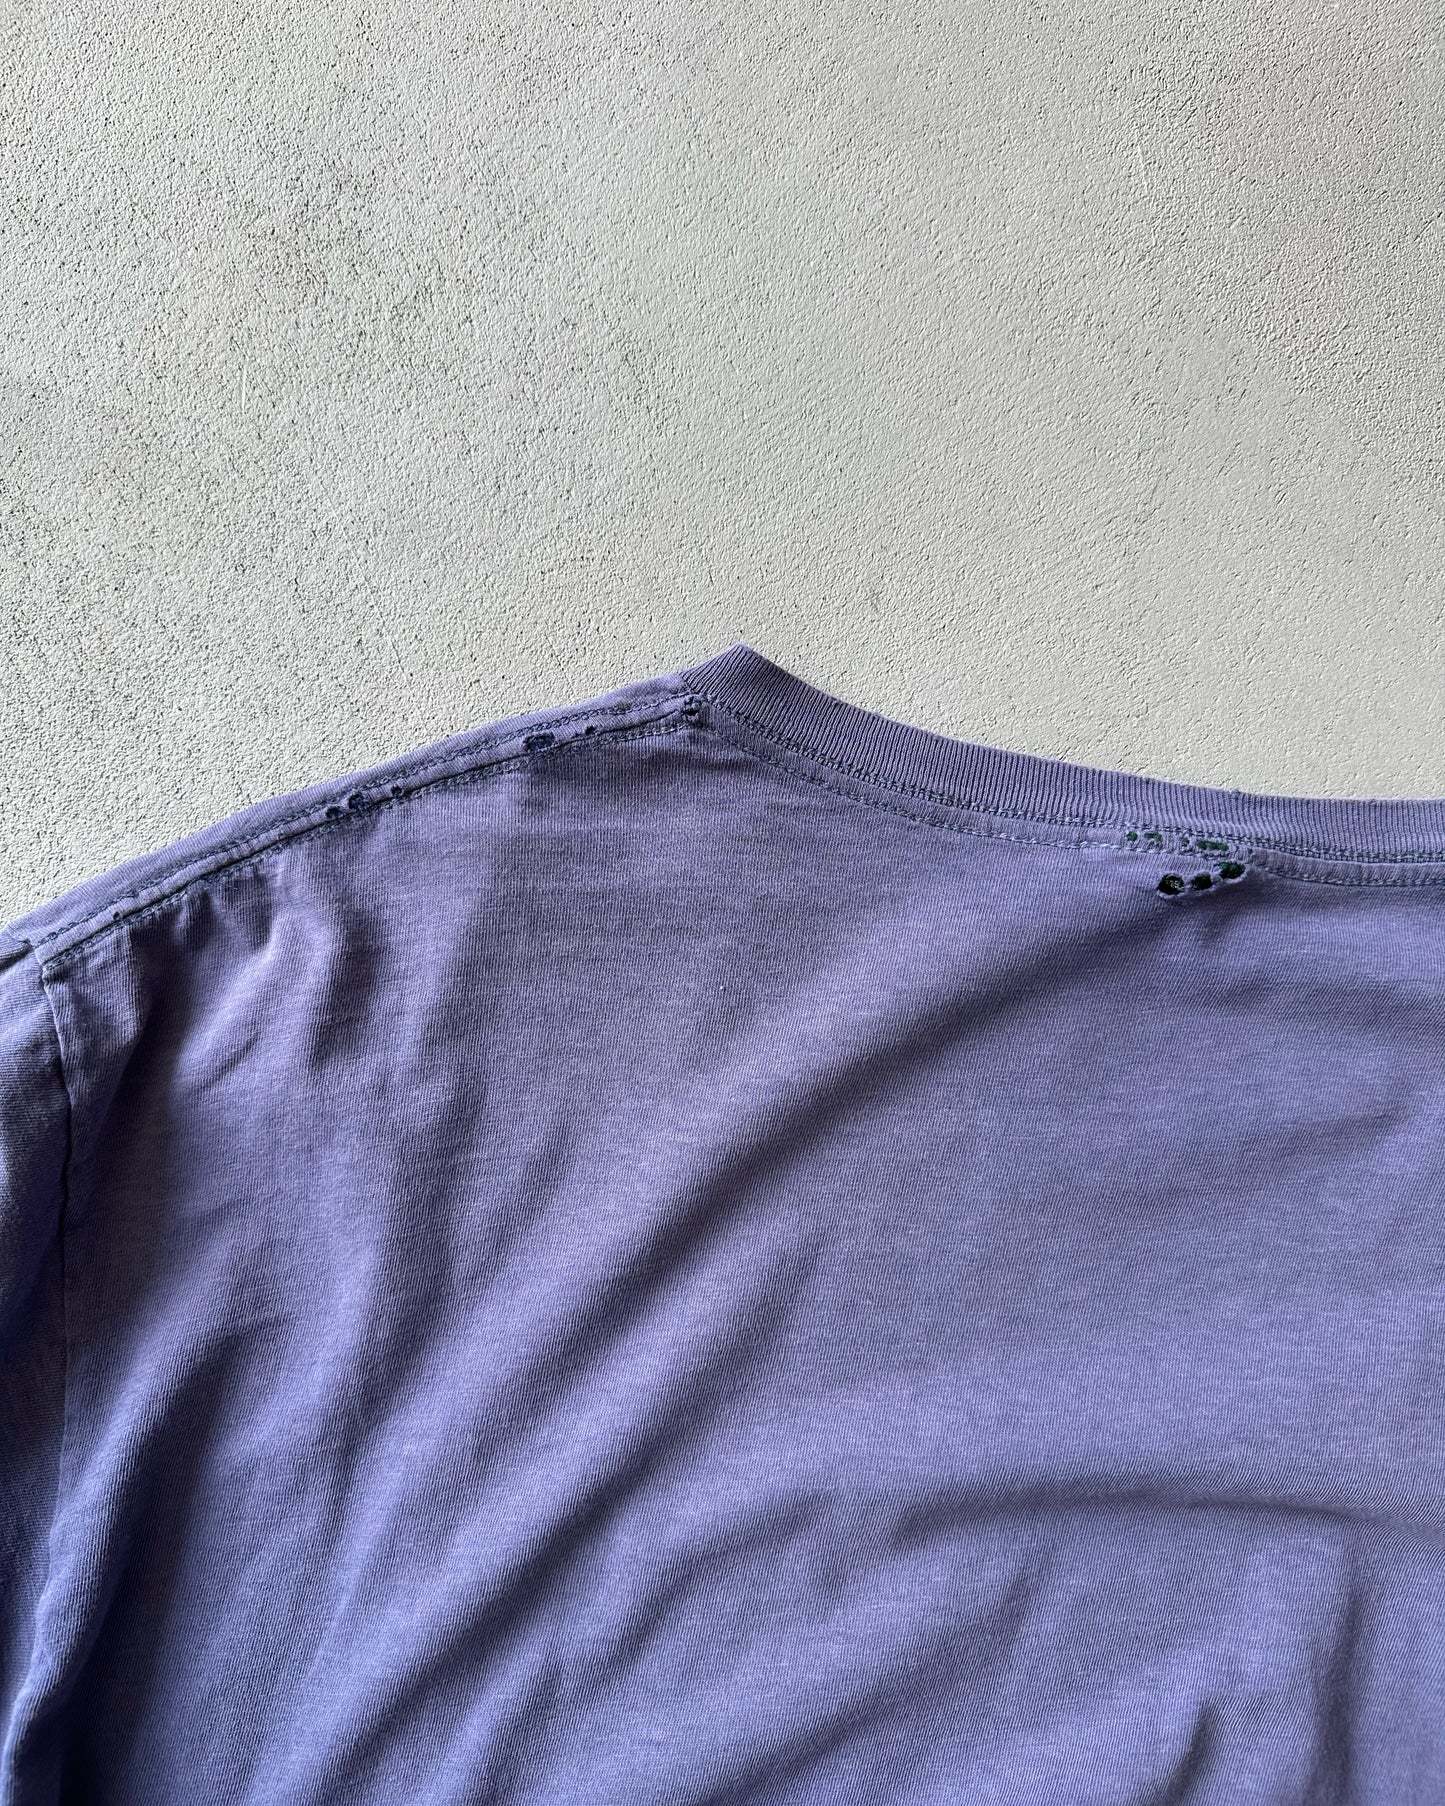 1990s - Distressed Blue Ralph Lauren Pocket T-Shirt - L/XL